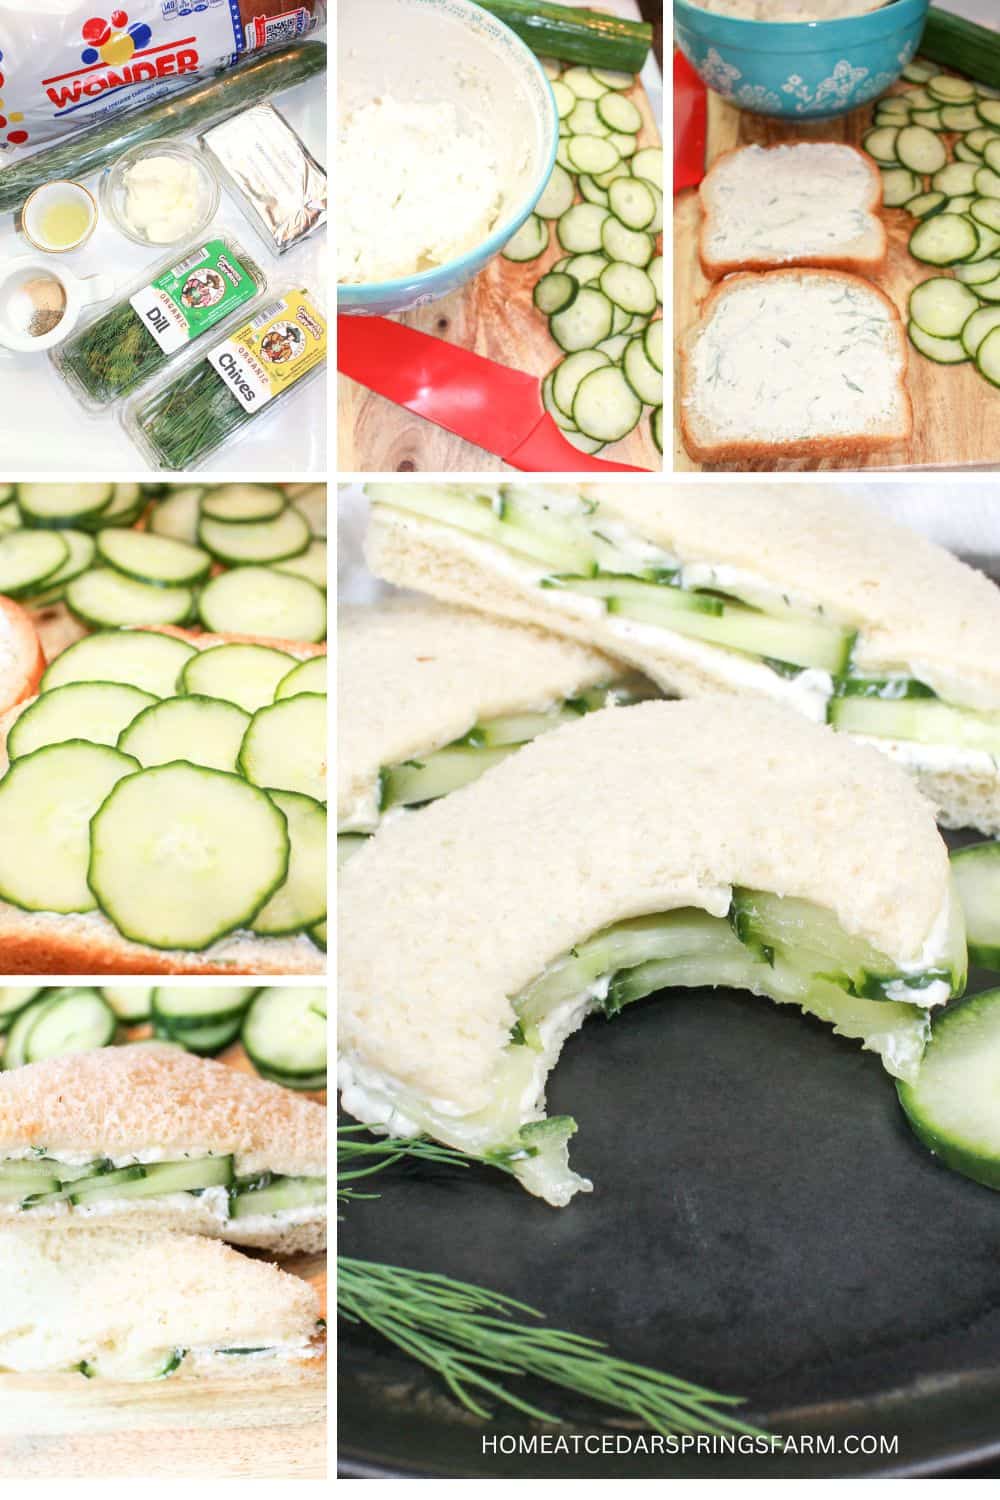 Steps shown for making a cucumber cream cheese sandwich.